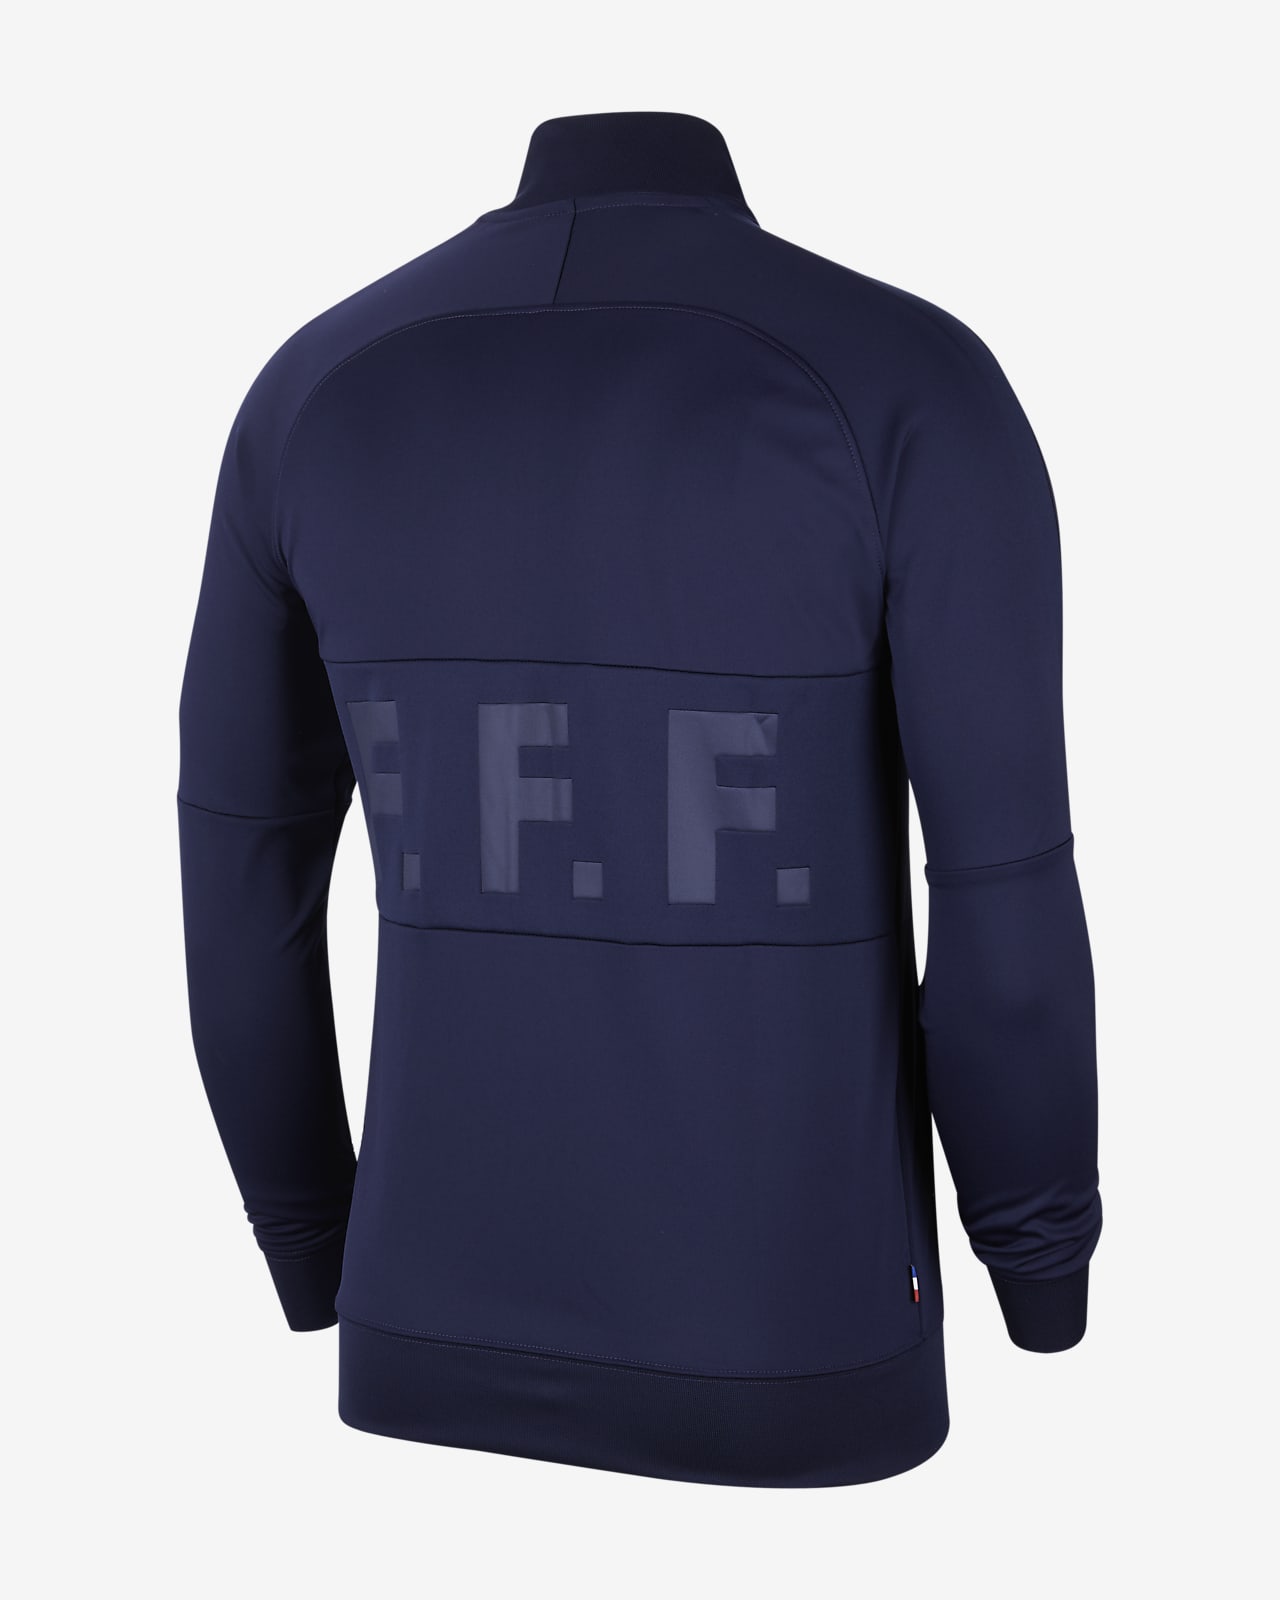 nike fff jacket